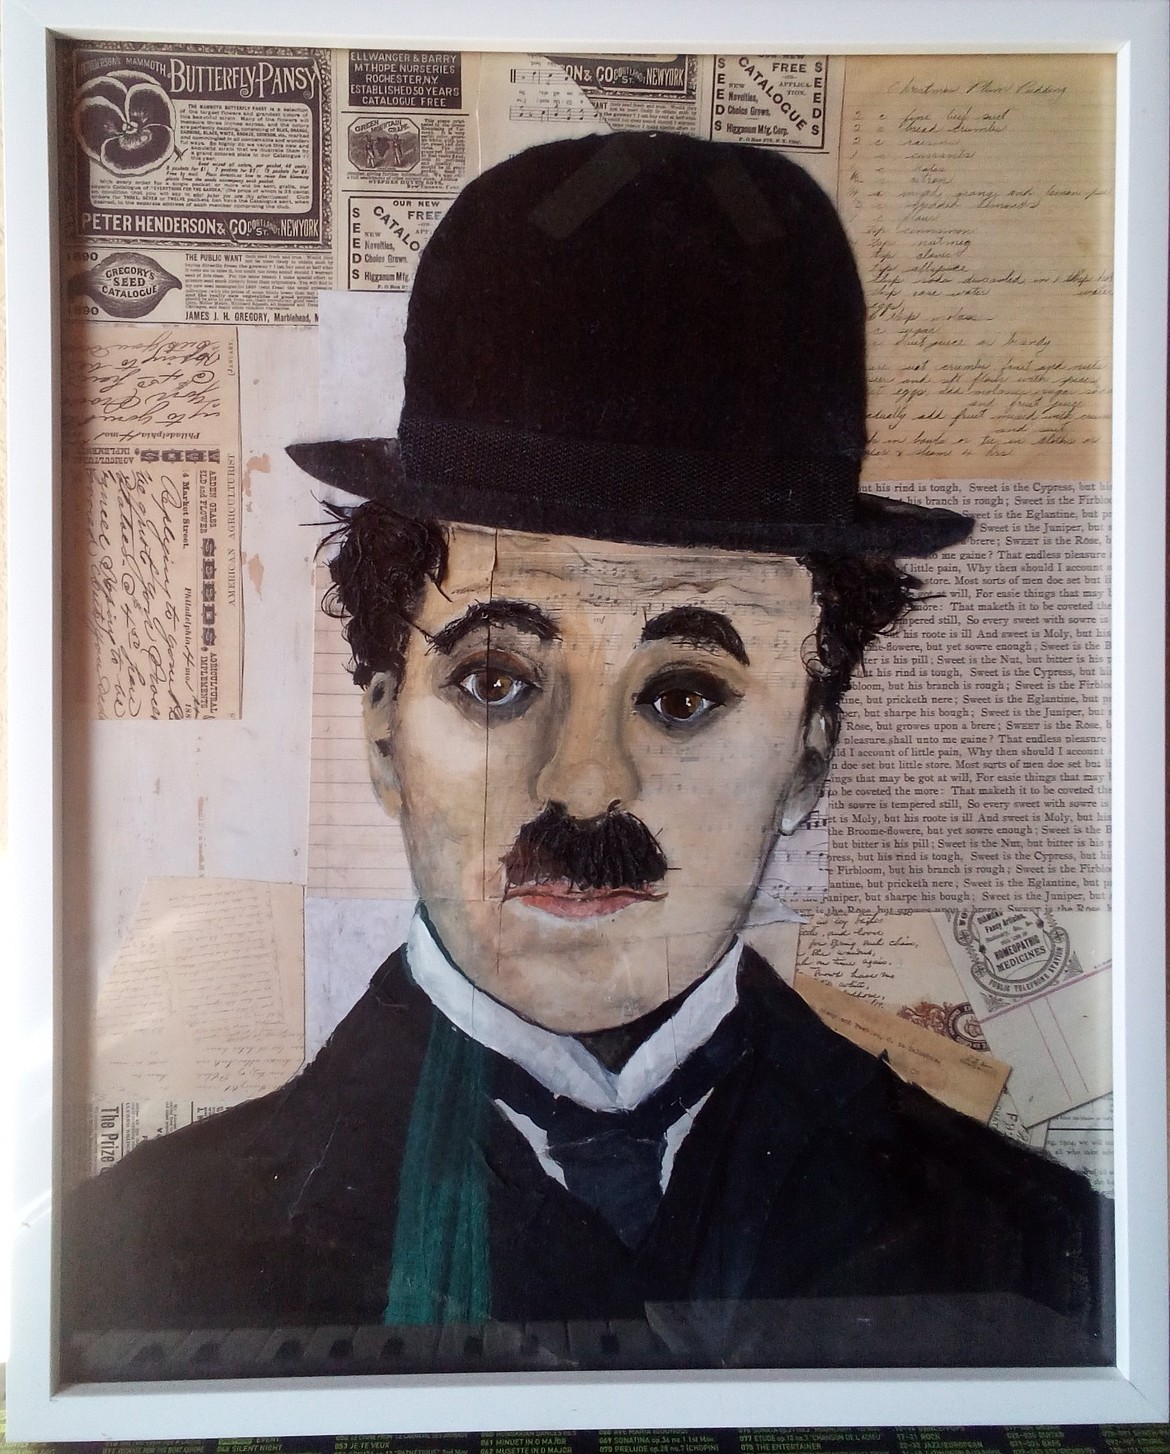 Lorna Barrowman had fun constructing her "Charlie Chaplin" collage.